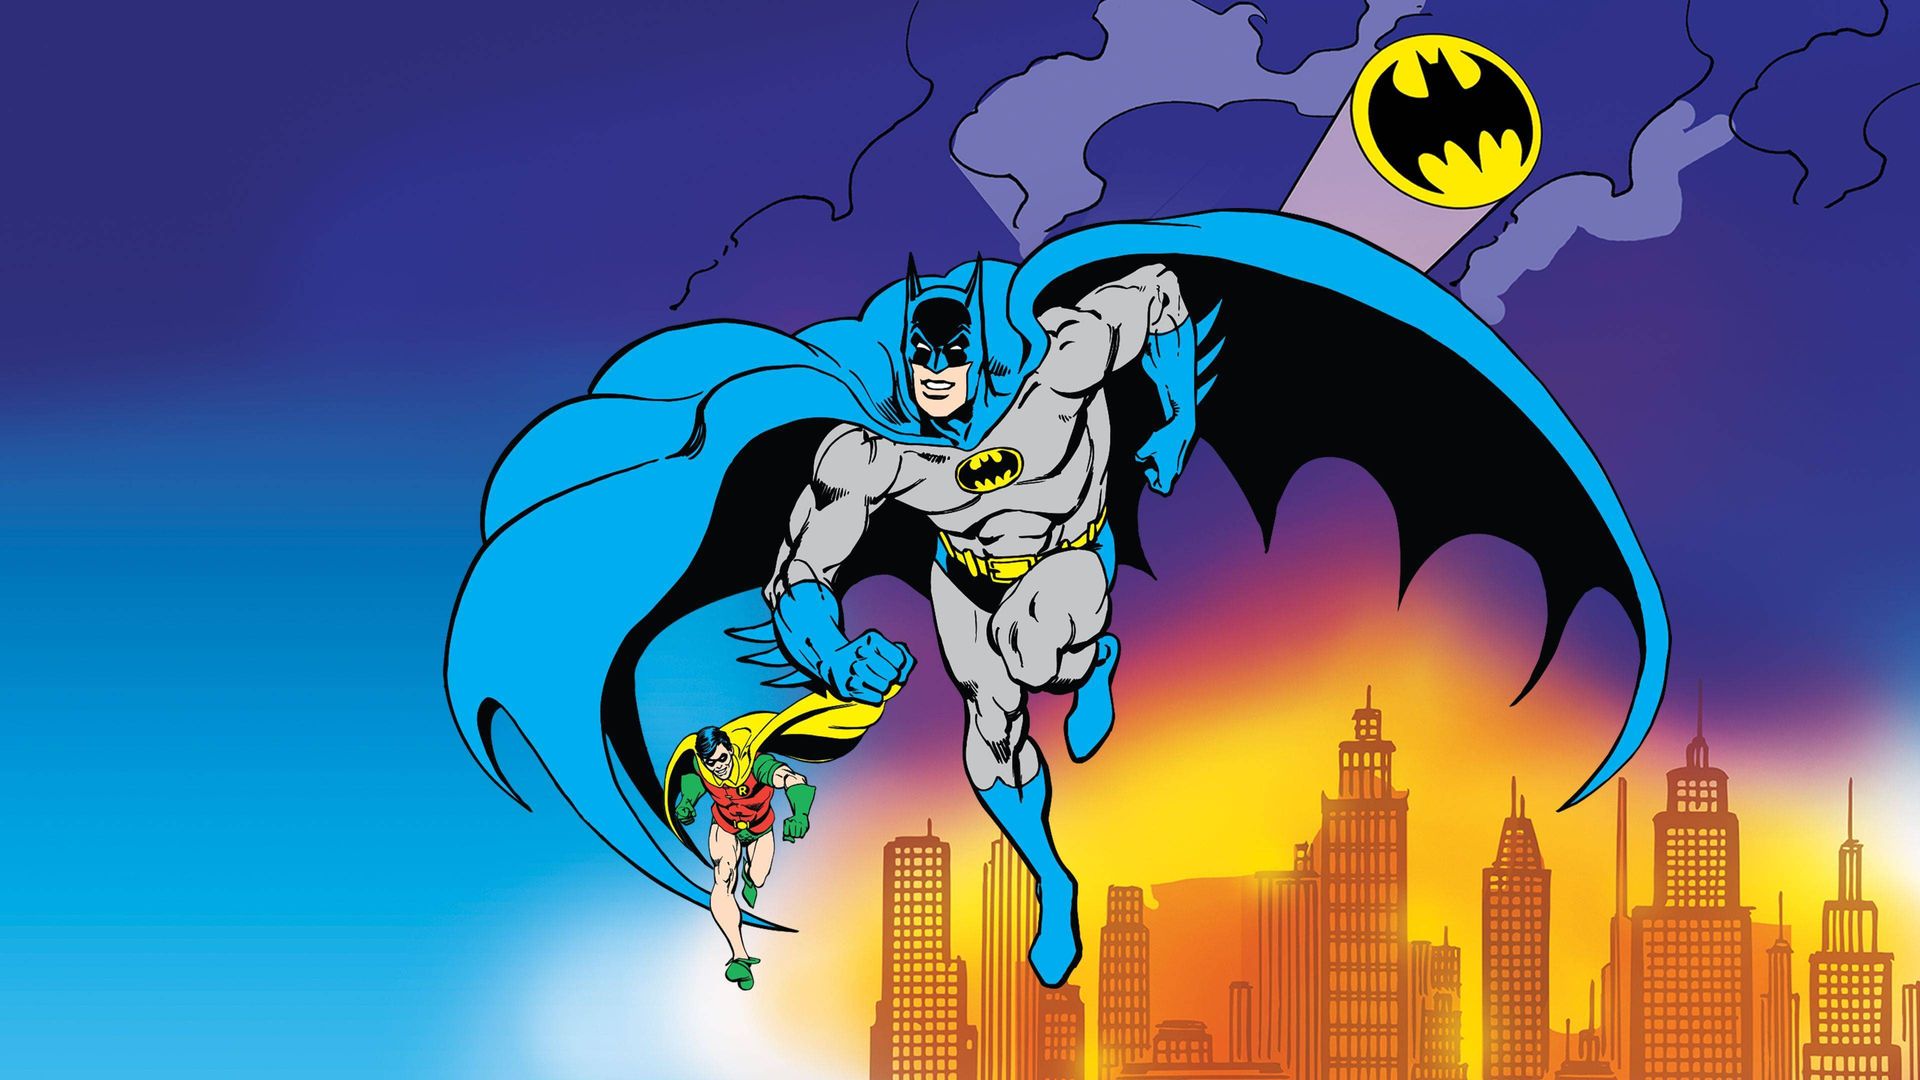 The Adventures of Batman background